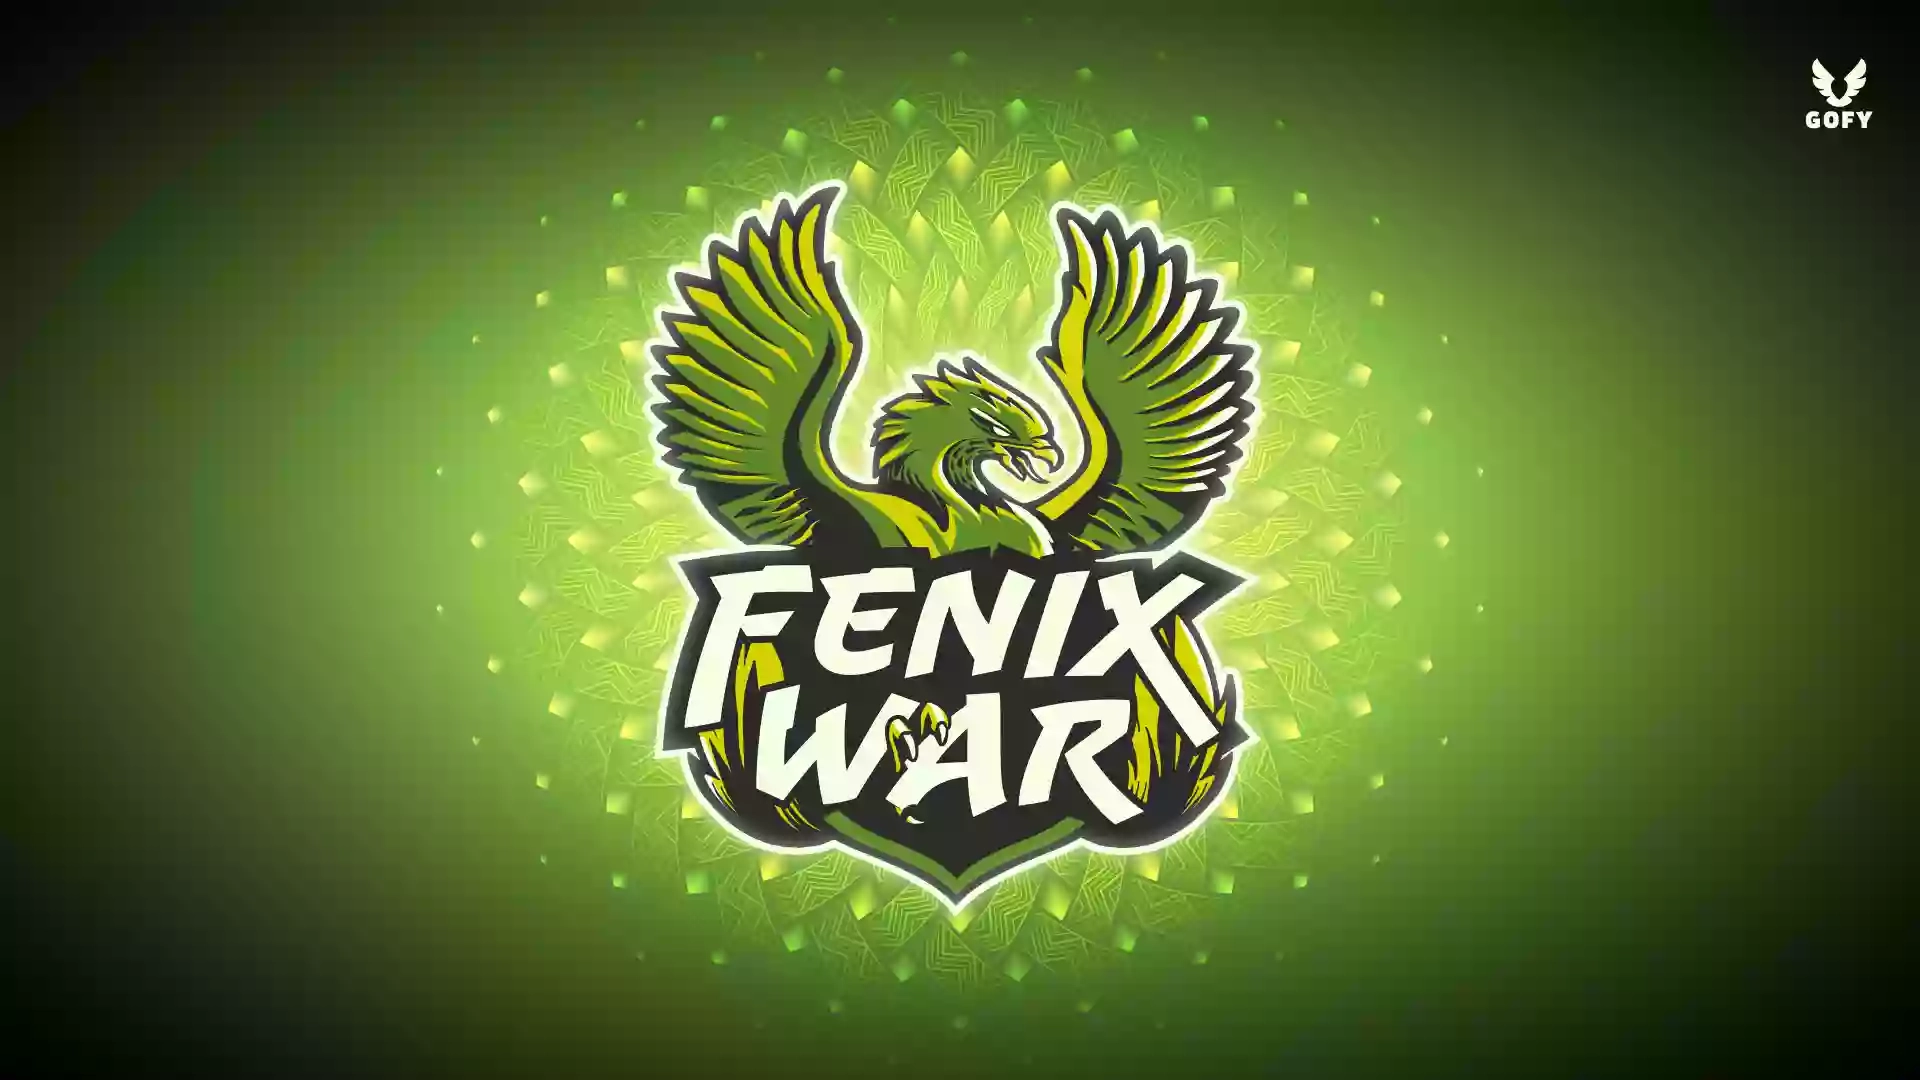 Fenix War